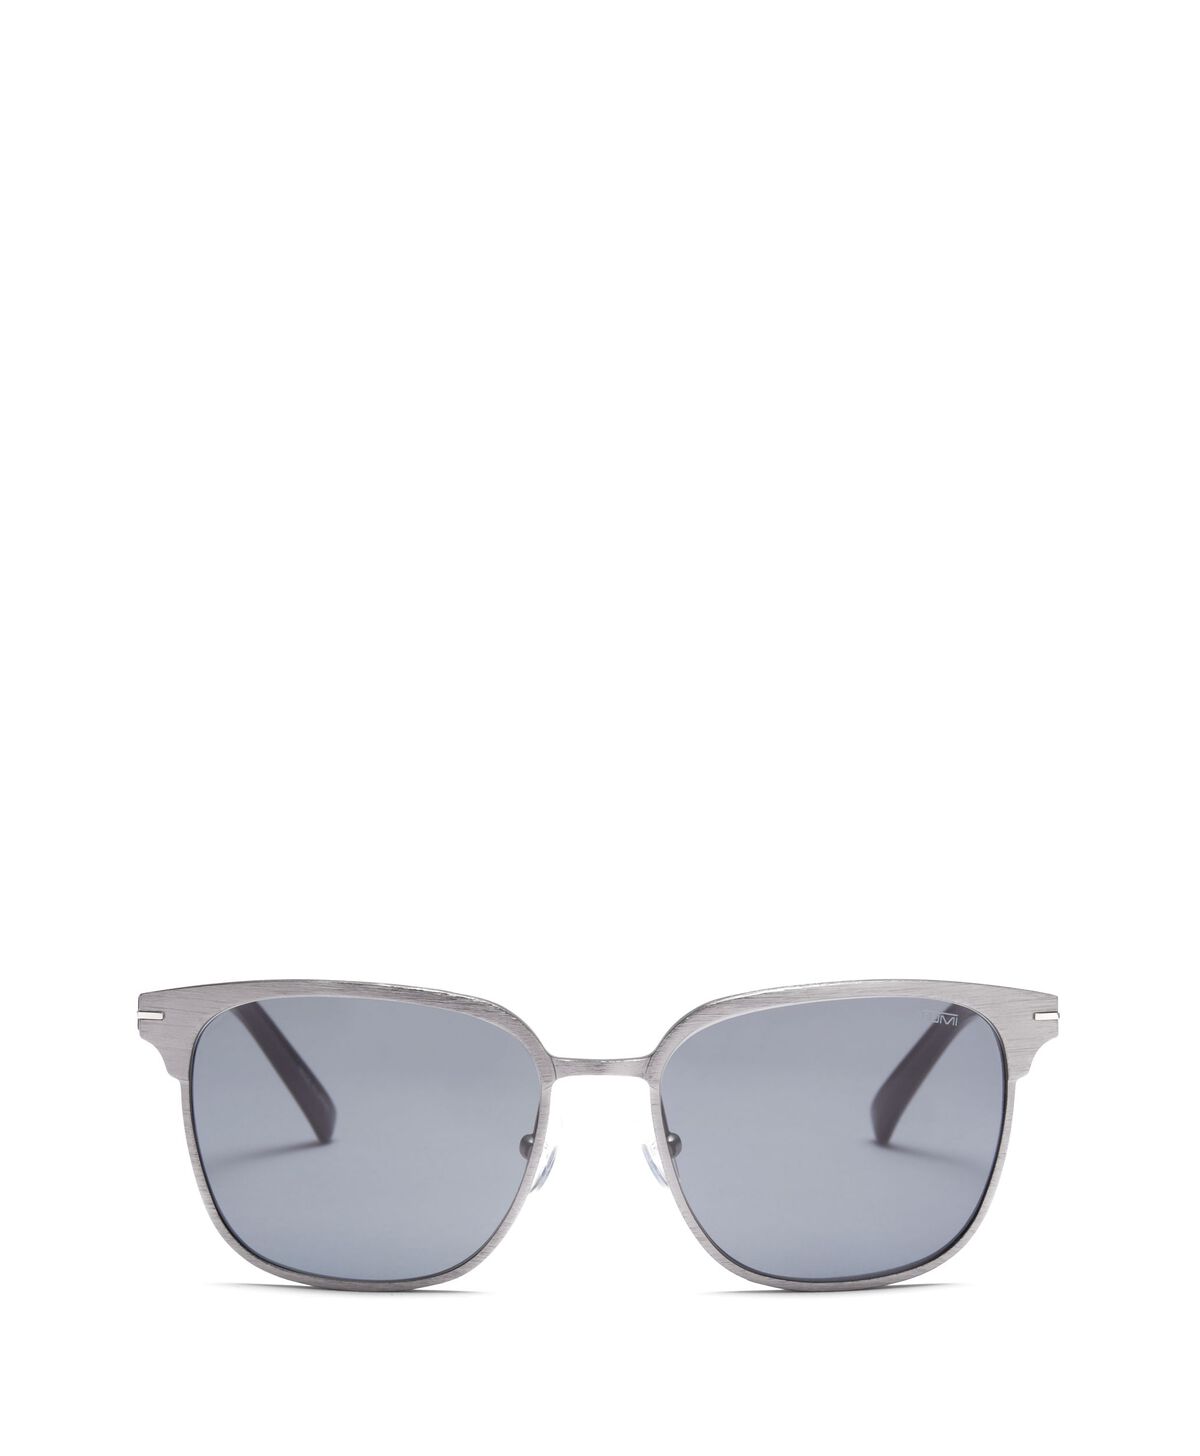 Tumi Eyewear Sunglasses  Gunmetal/Navy